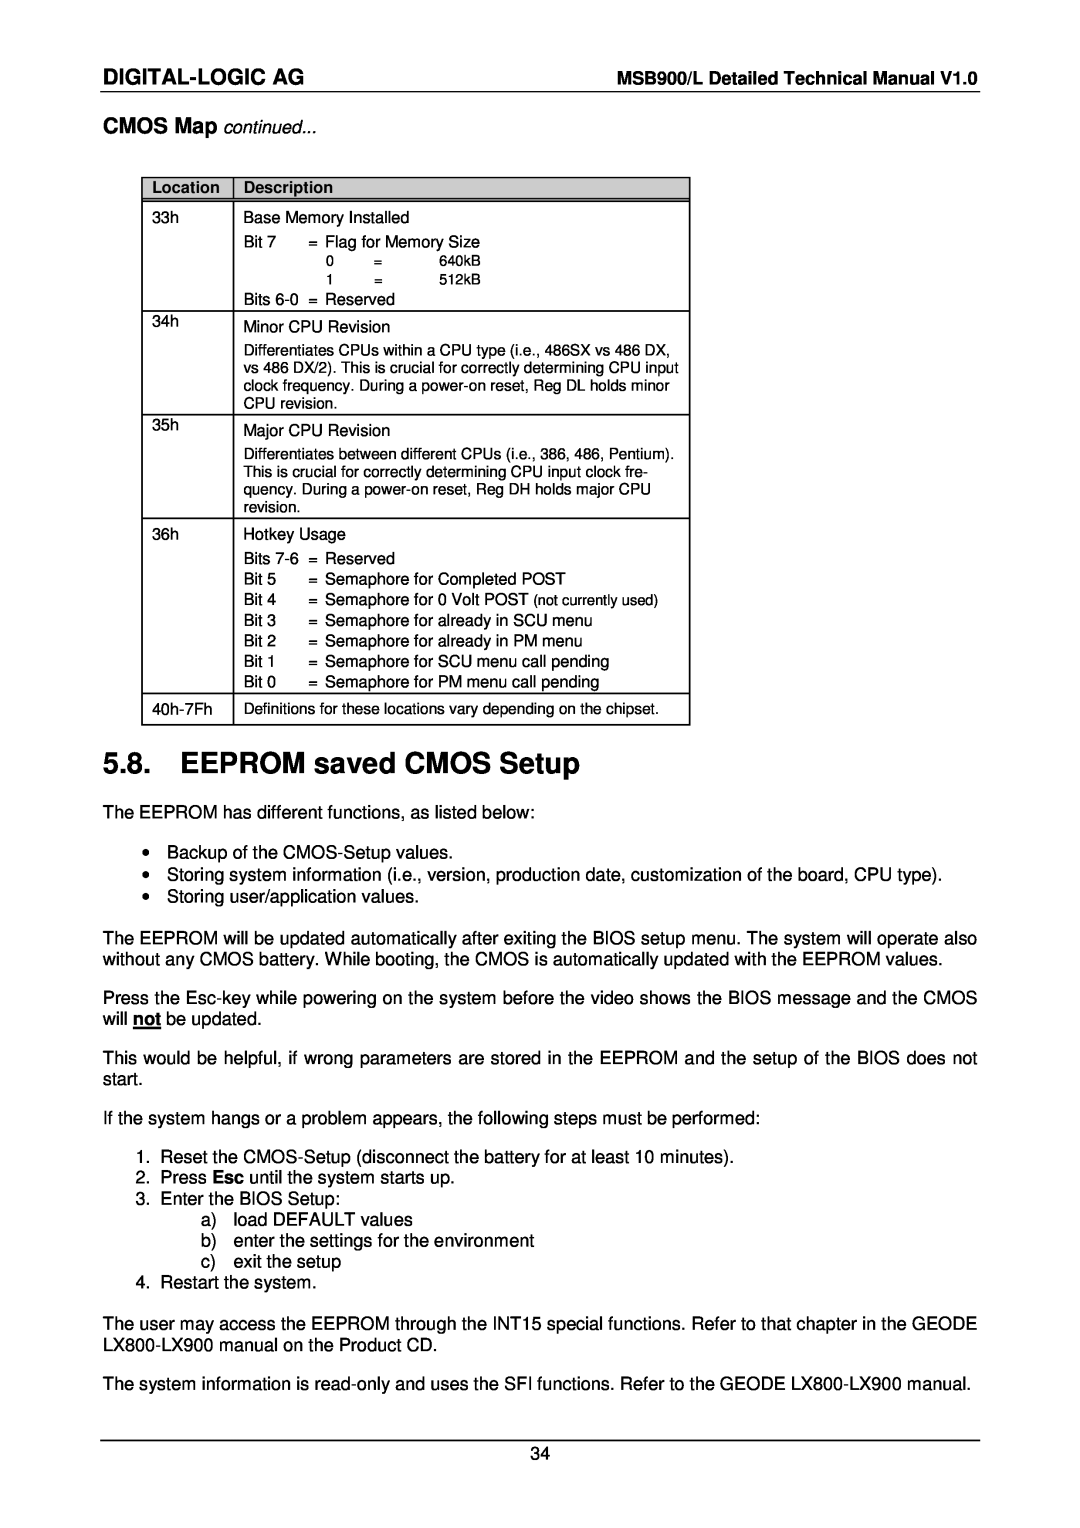 Compaq MSB900L user manual EEPROM saved CMOS Setup, Digital-Logic Ag 